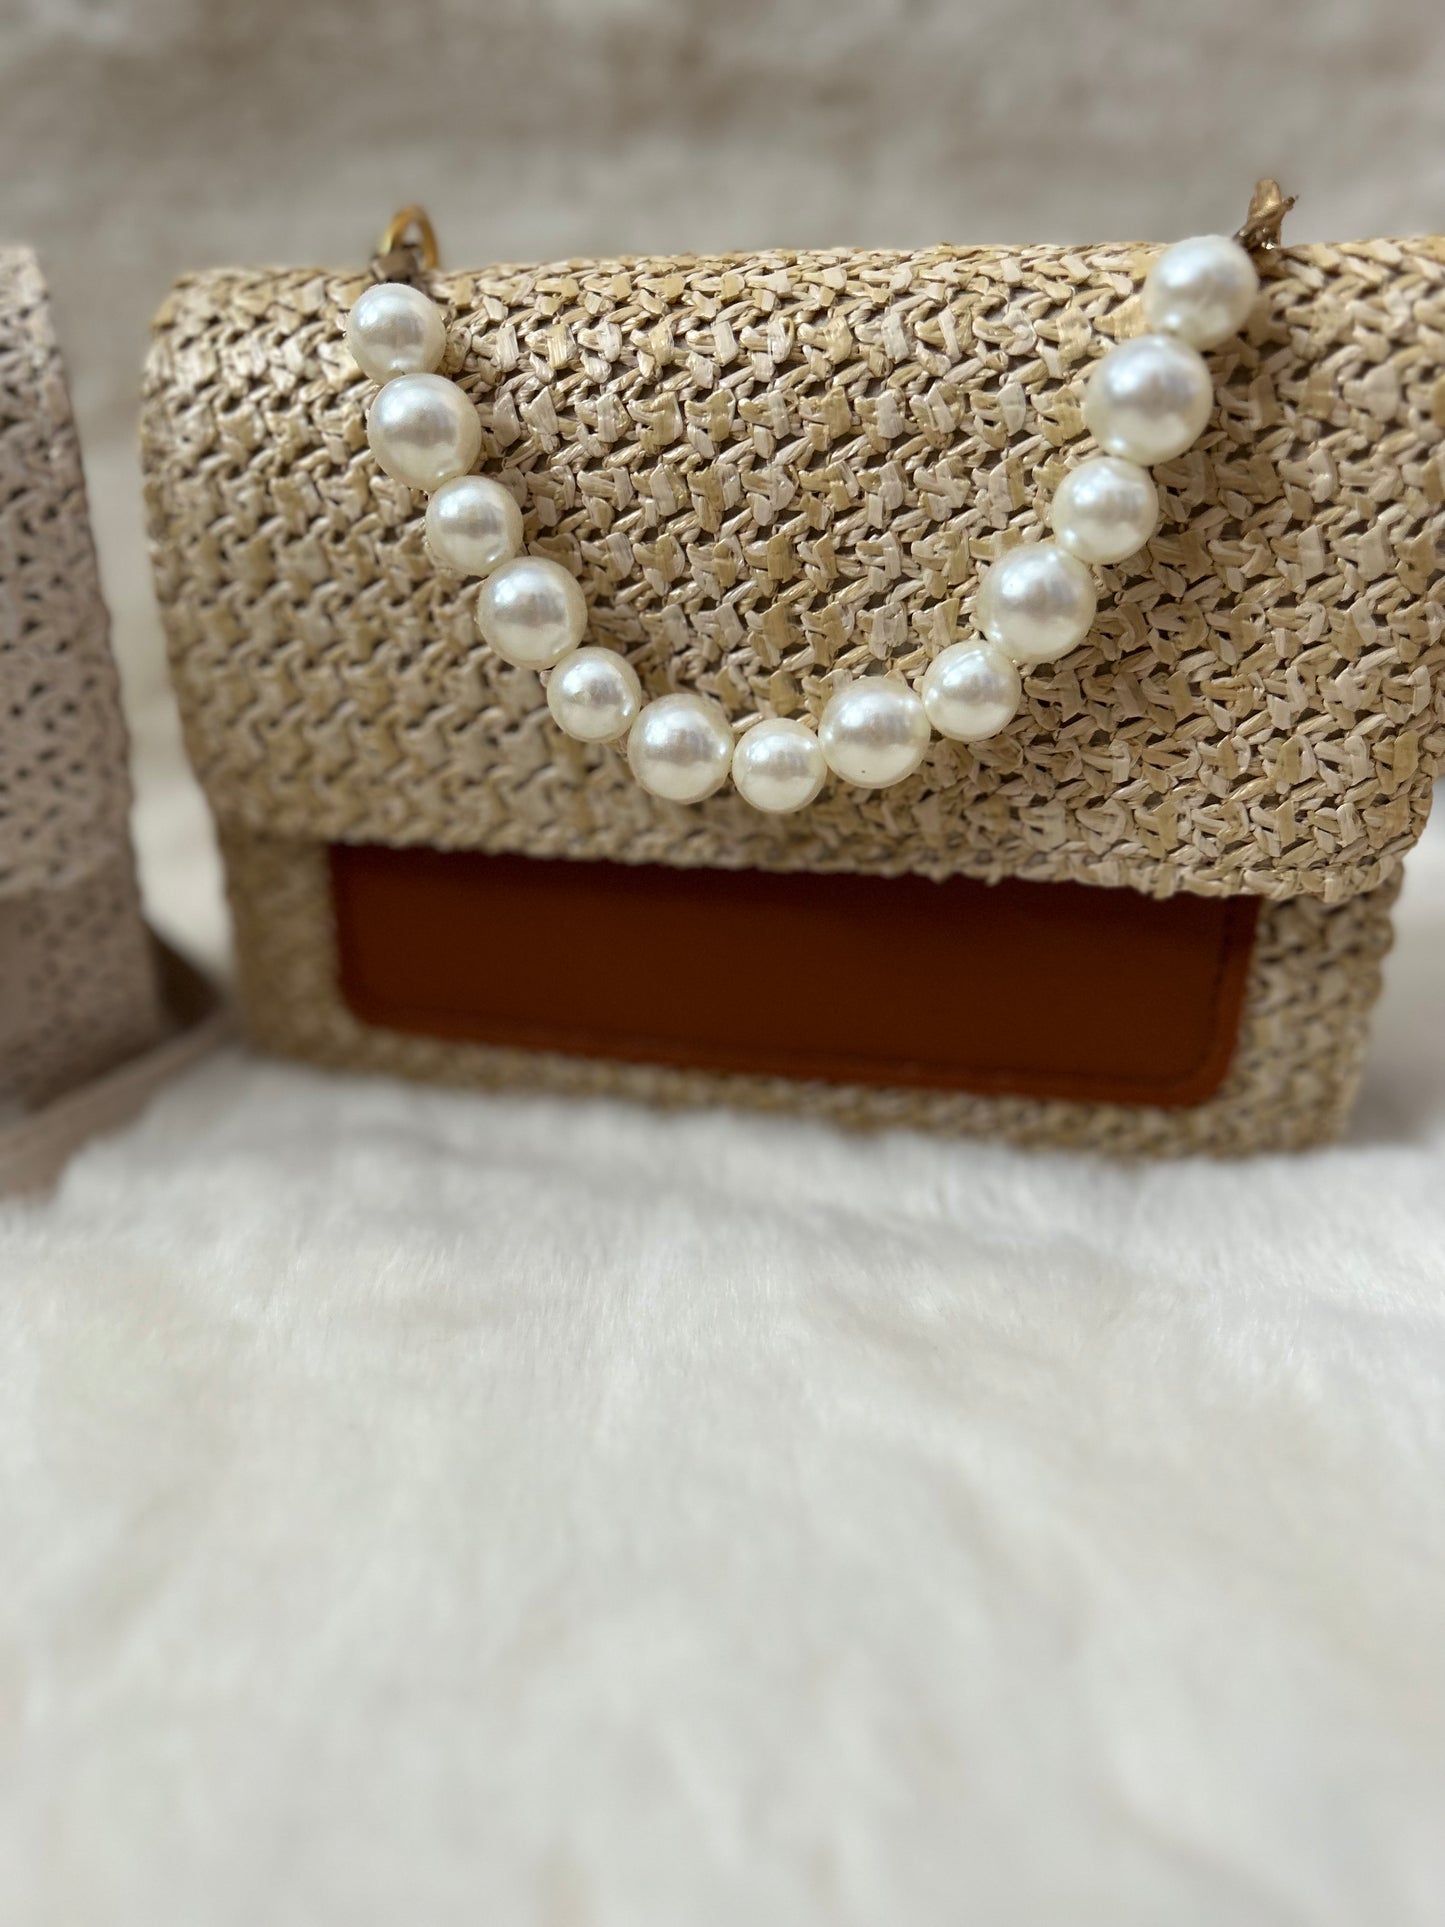 Pearl Handbags